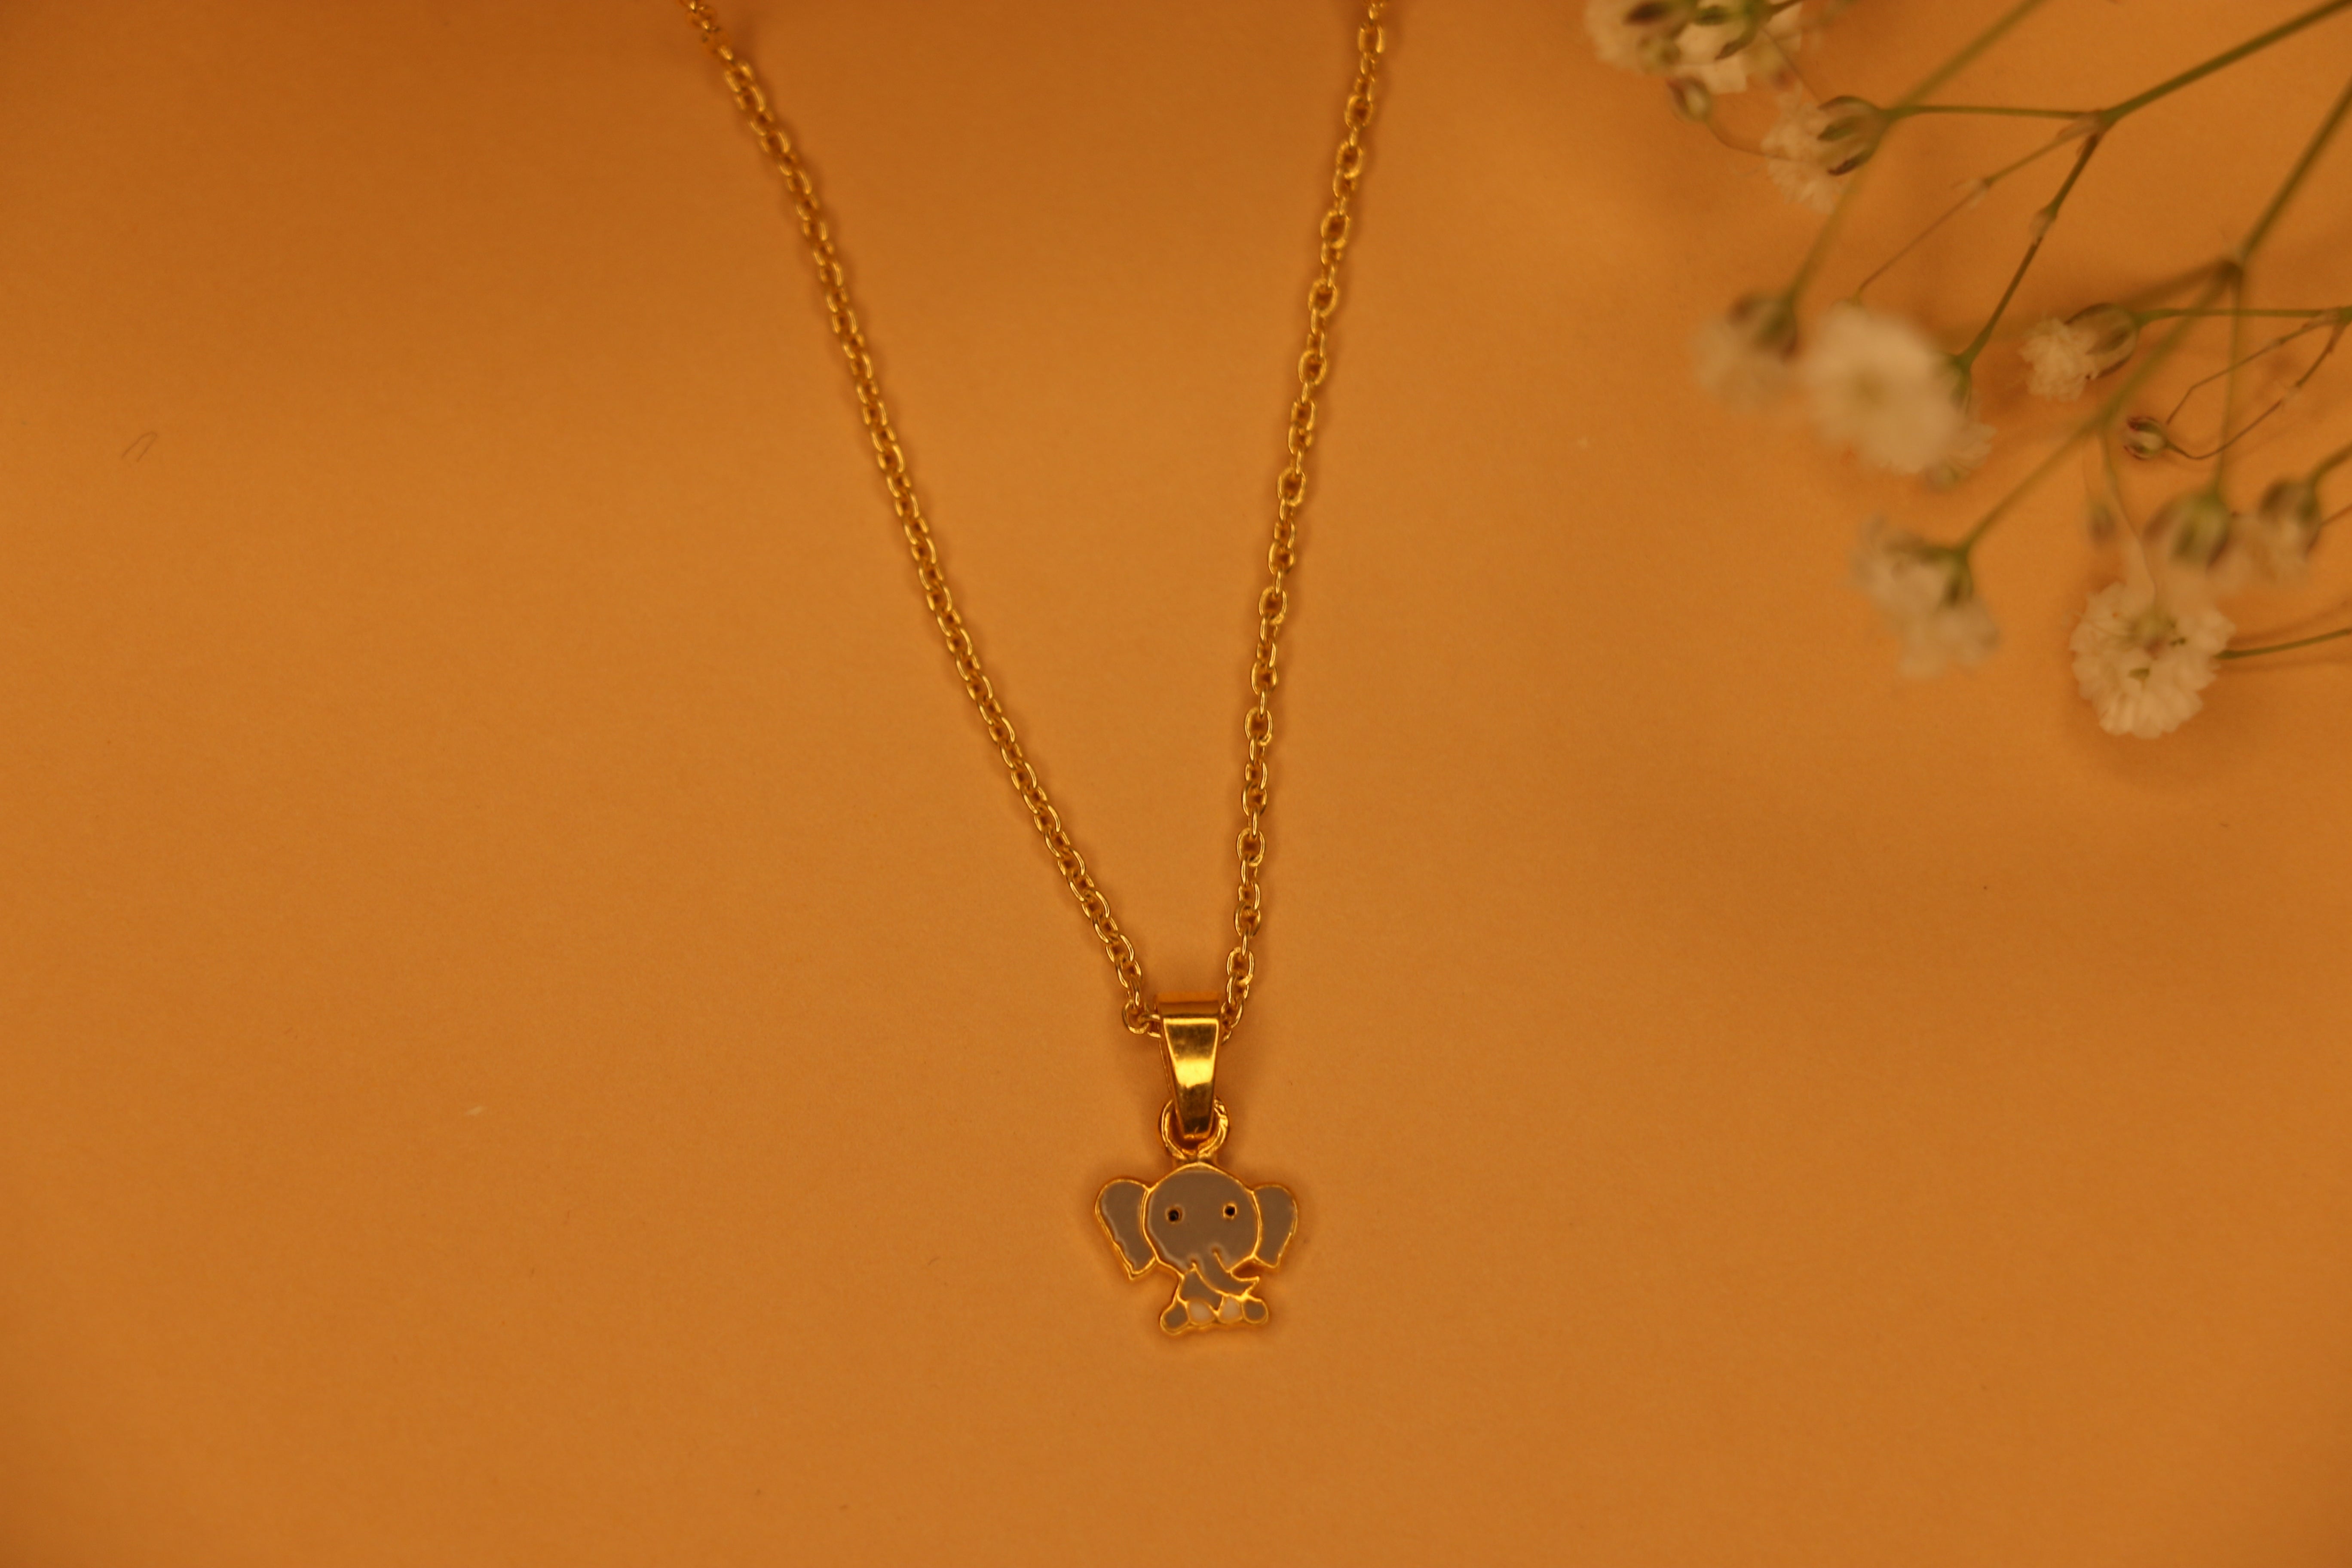 Elephant charm necklace